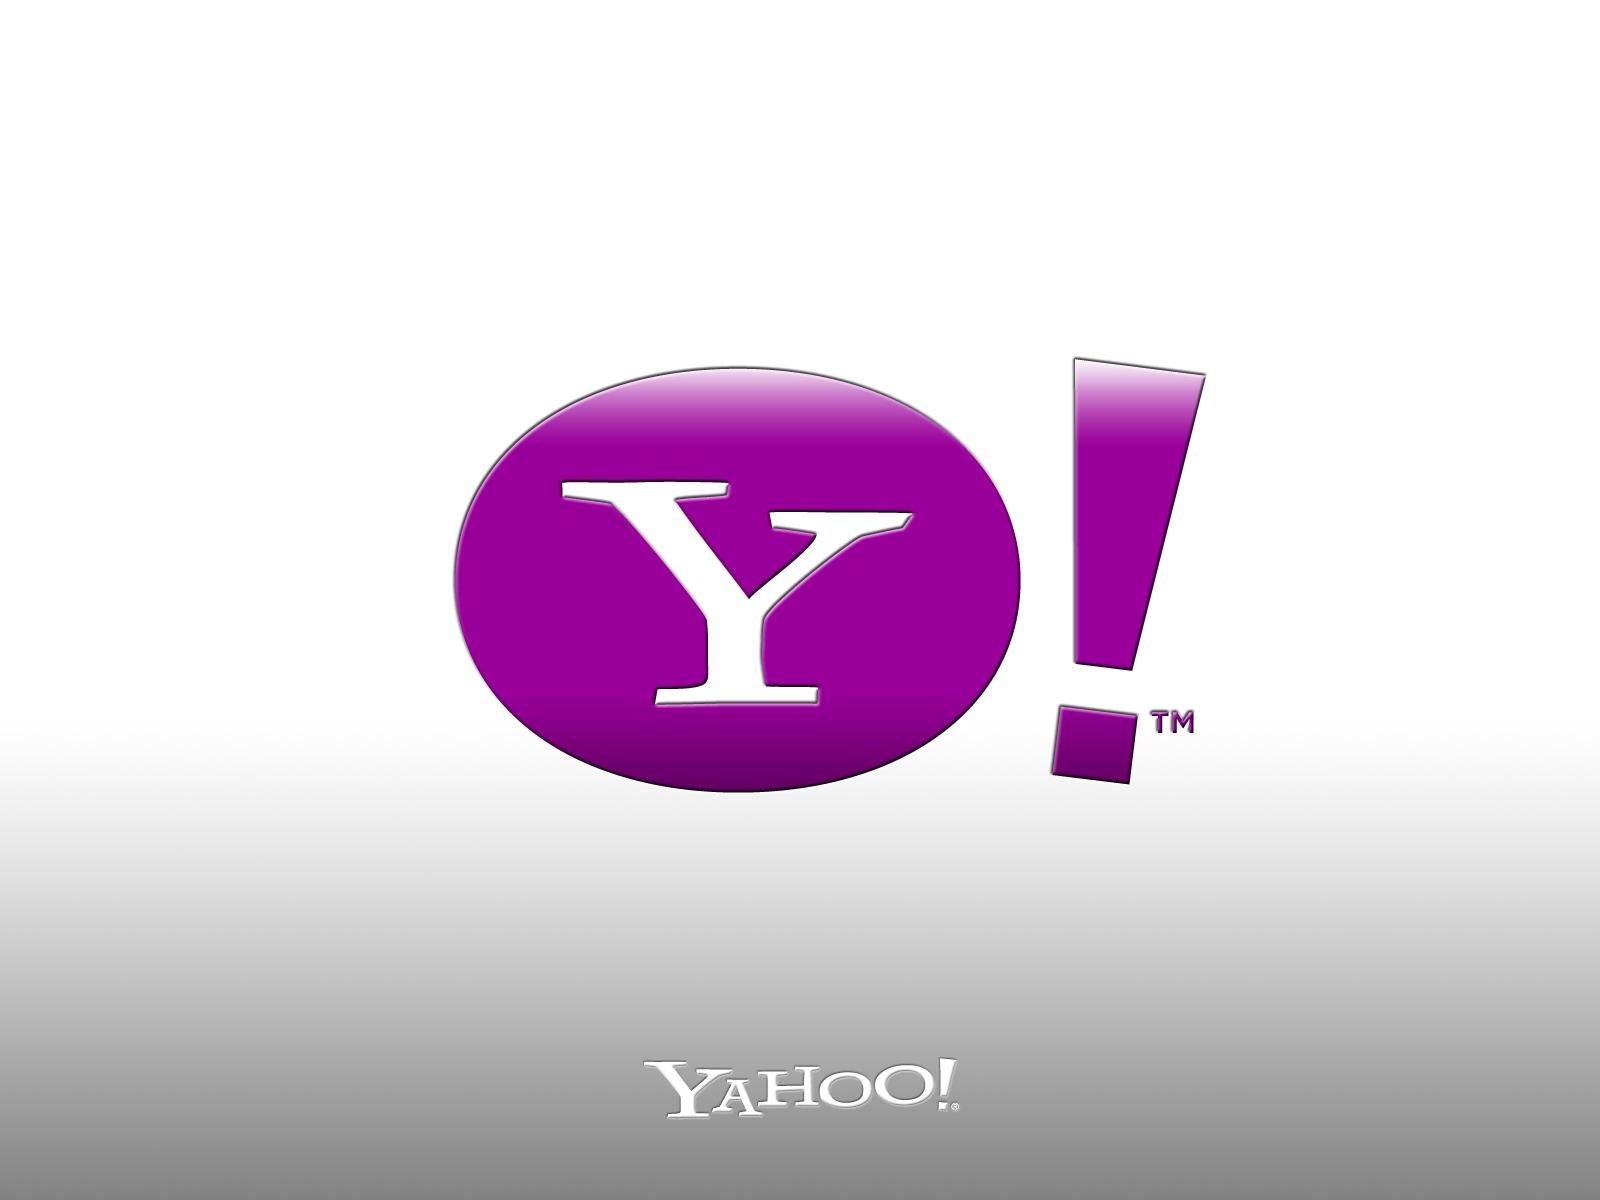 Twitter Headers / Facebook Covers / Wallpaper / Calendars: Yahoo